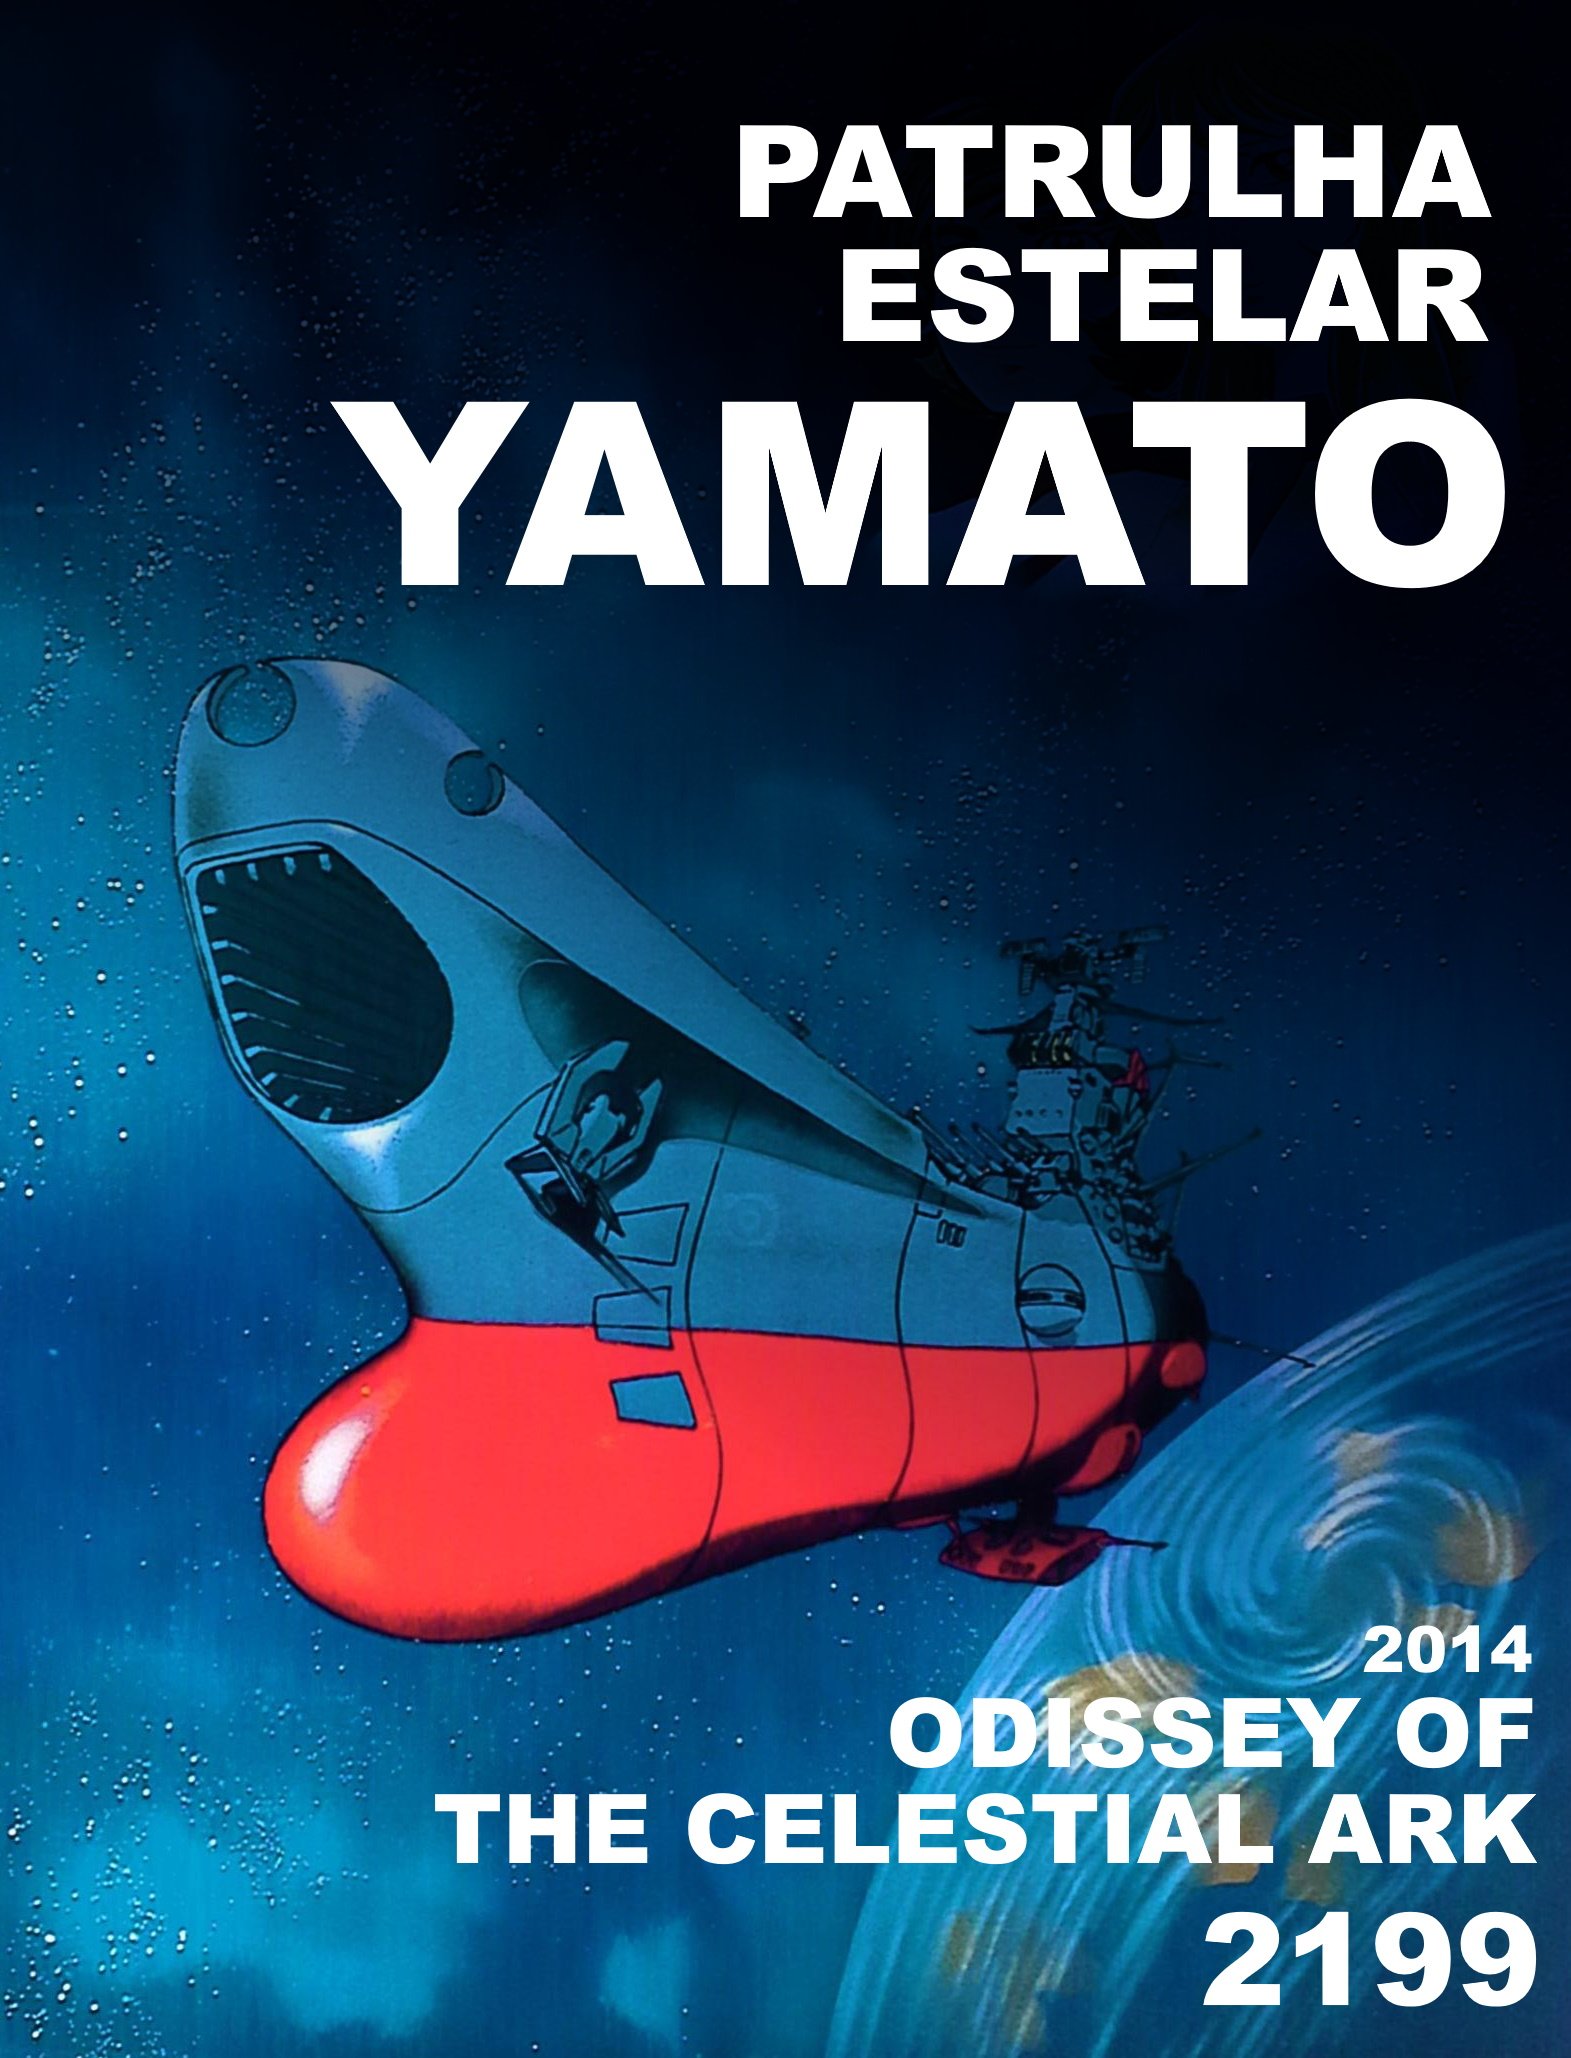 SPACE BATTLESHIP YAMATO - PATRULHA ESTELAR - ODISSEY OF THE CELESTIAL ARK 2199 - 2014